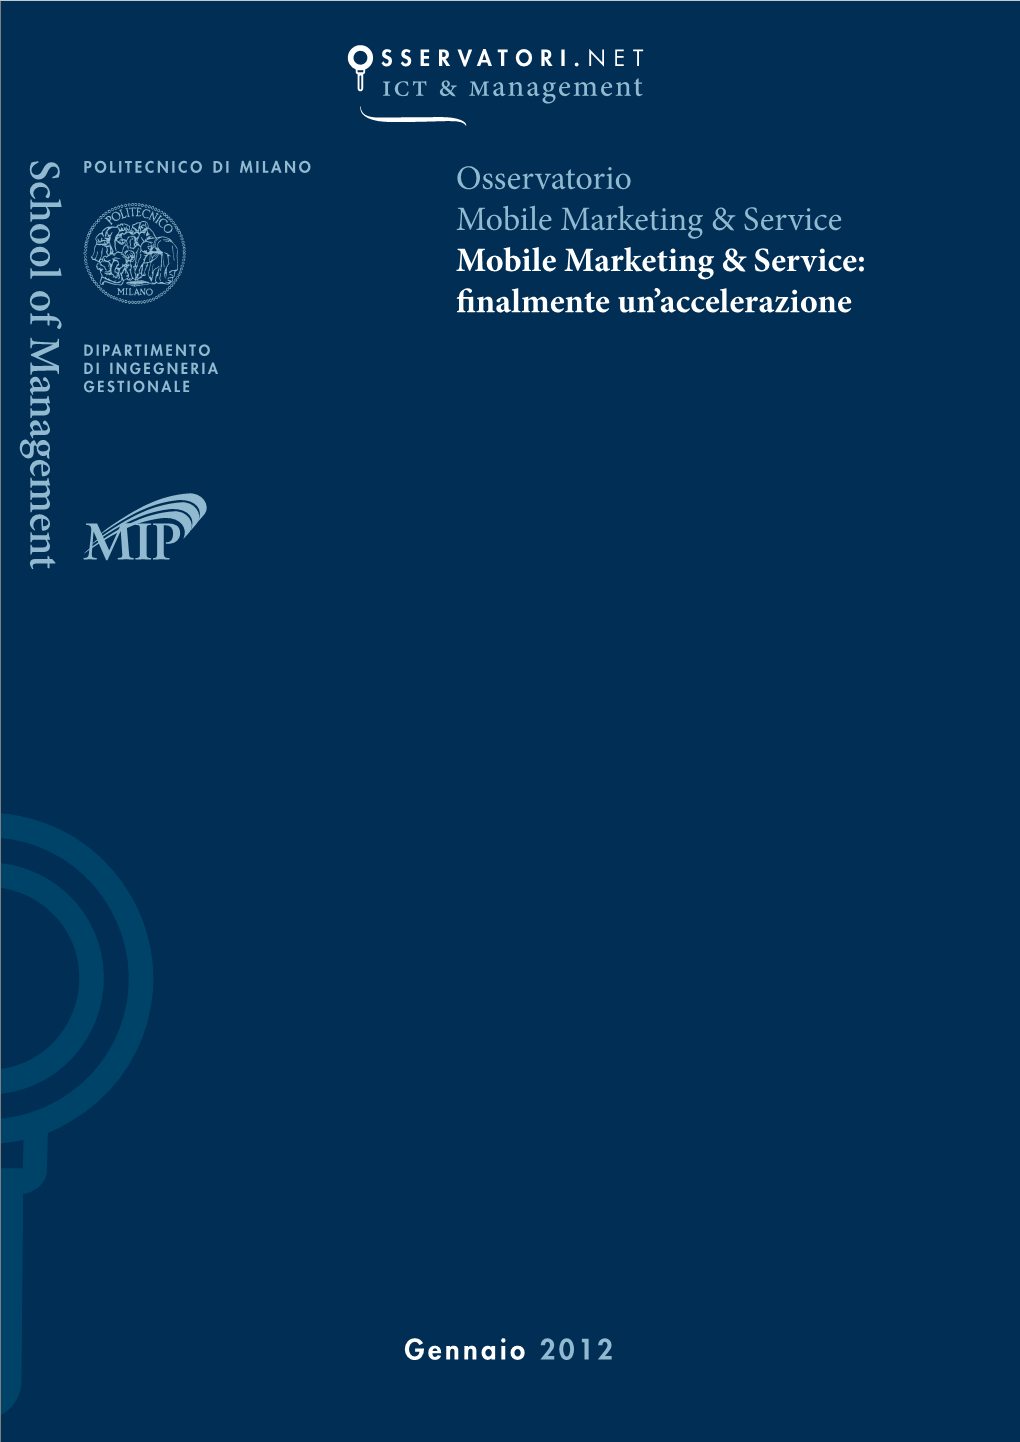 Mobile Marketing & Service